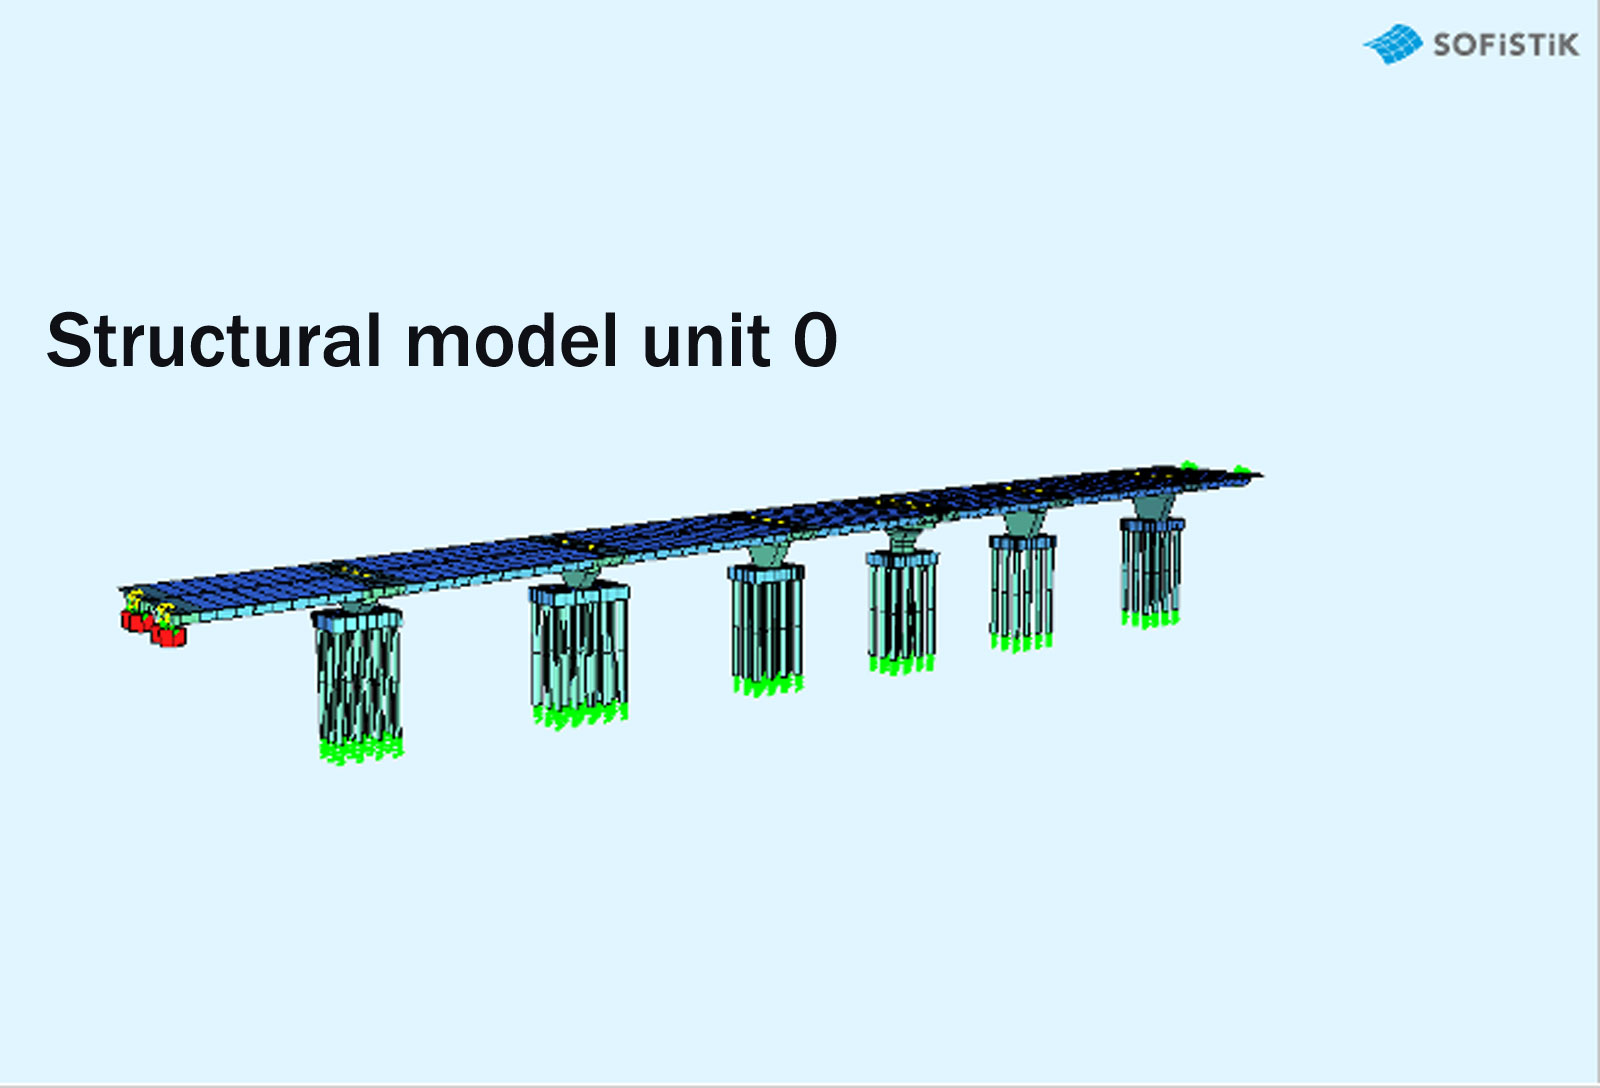 Structural model of segmental bridge